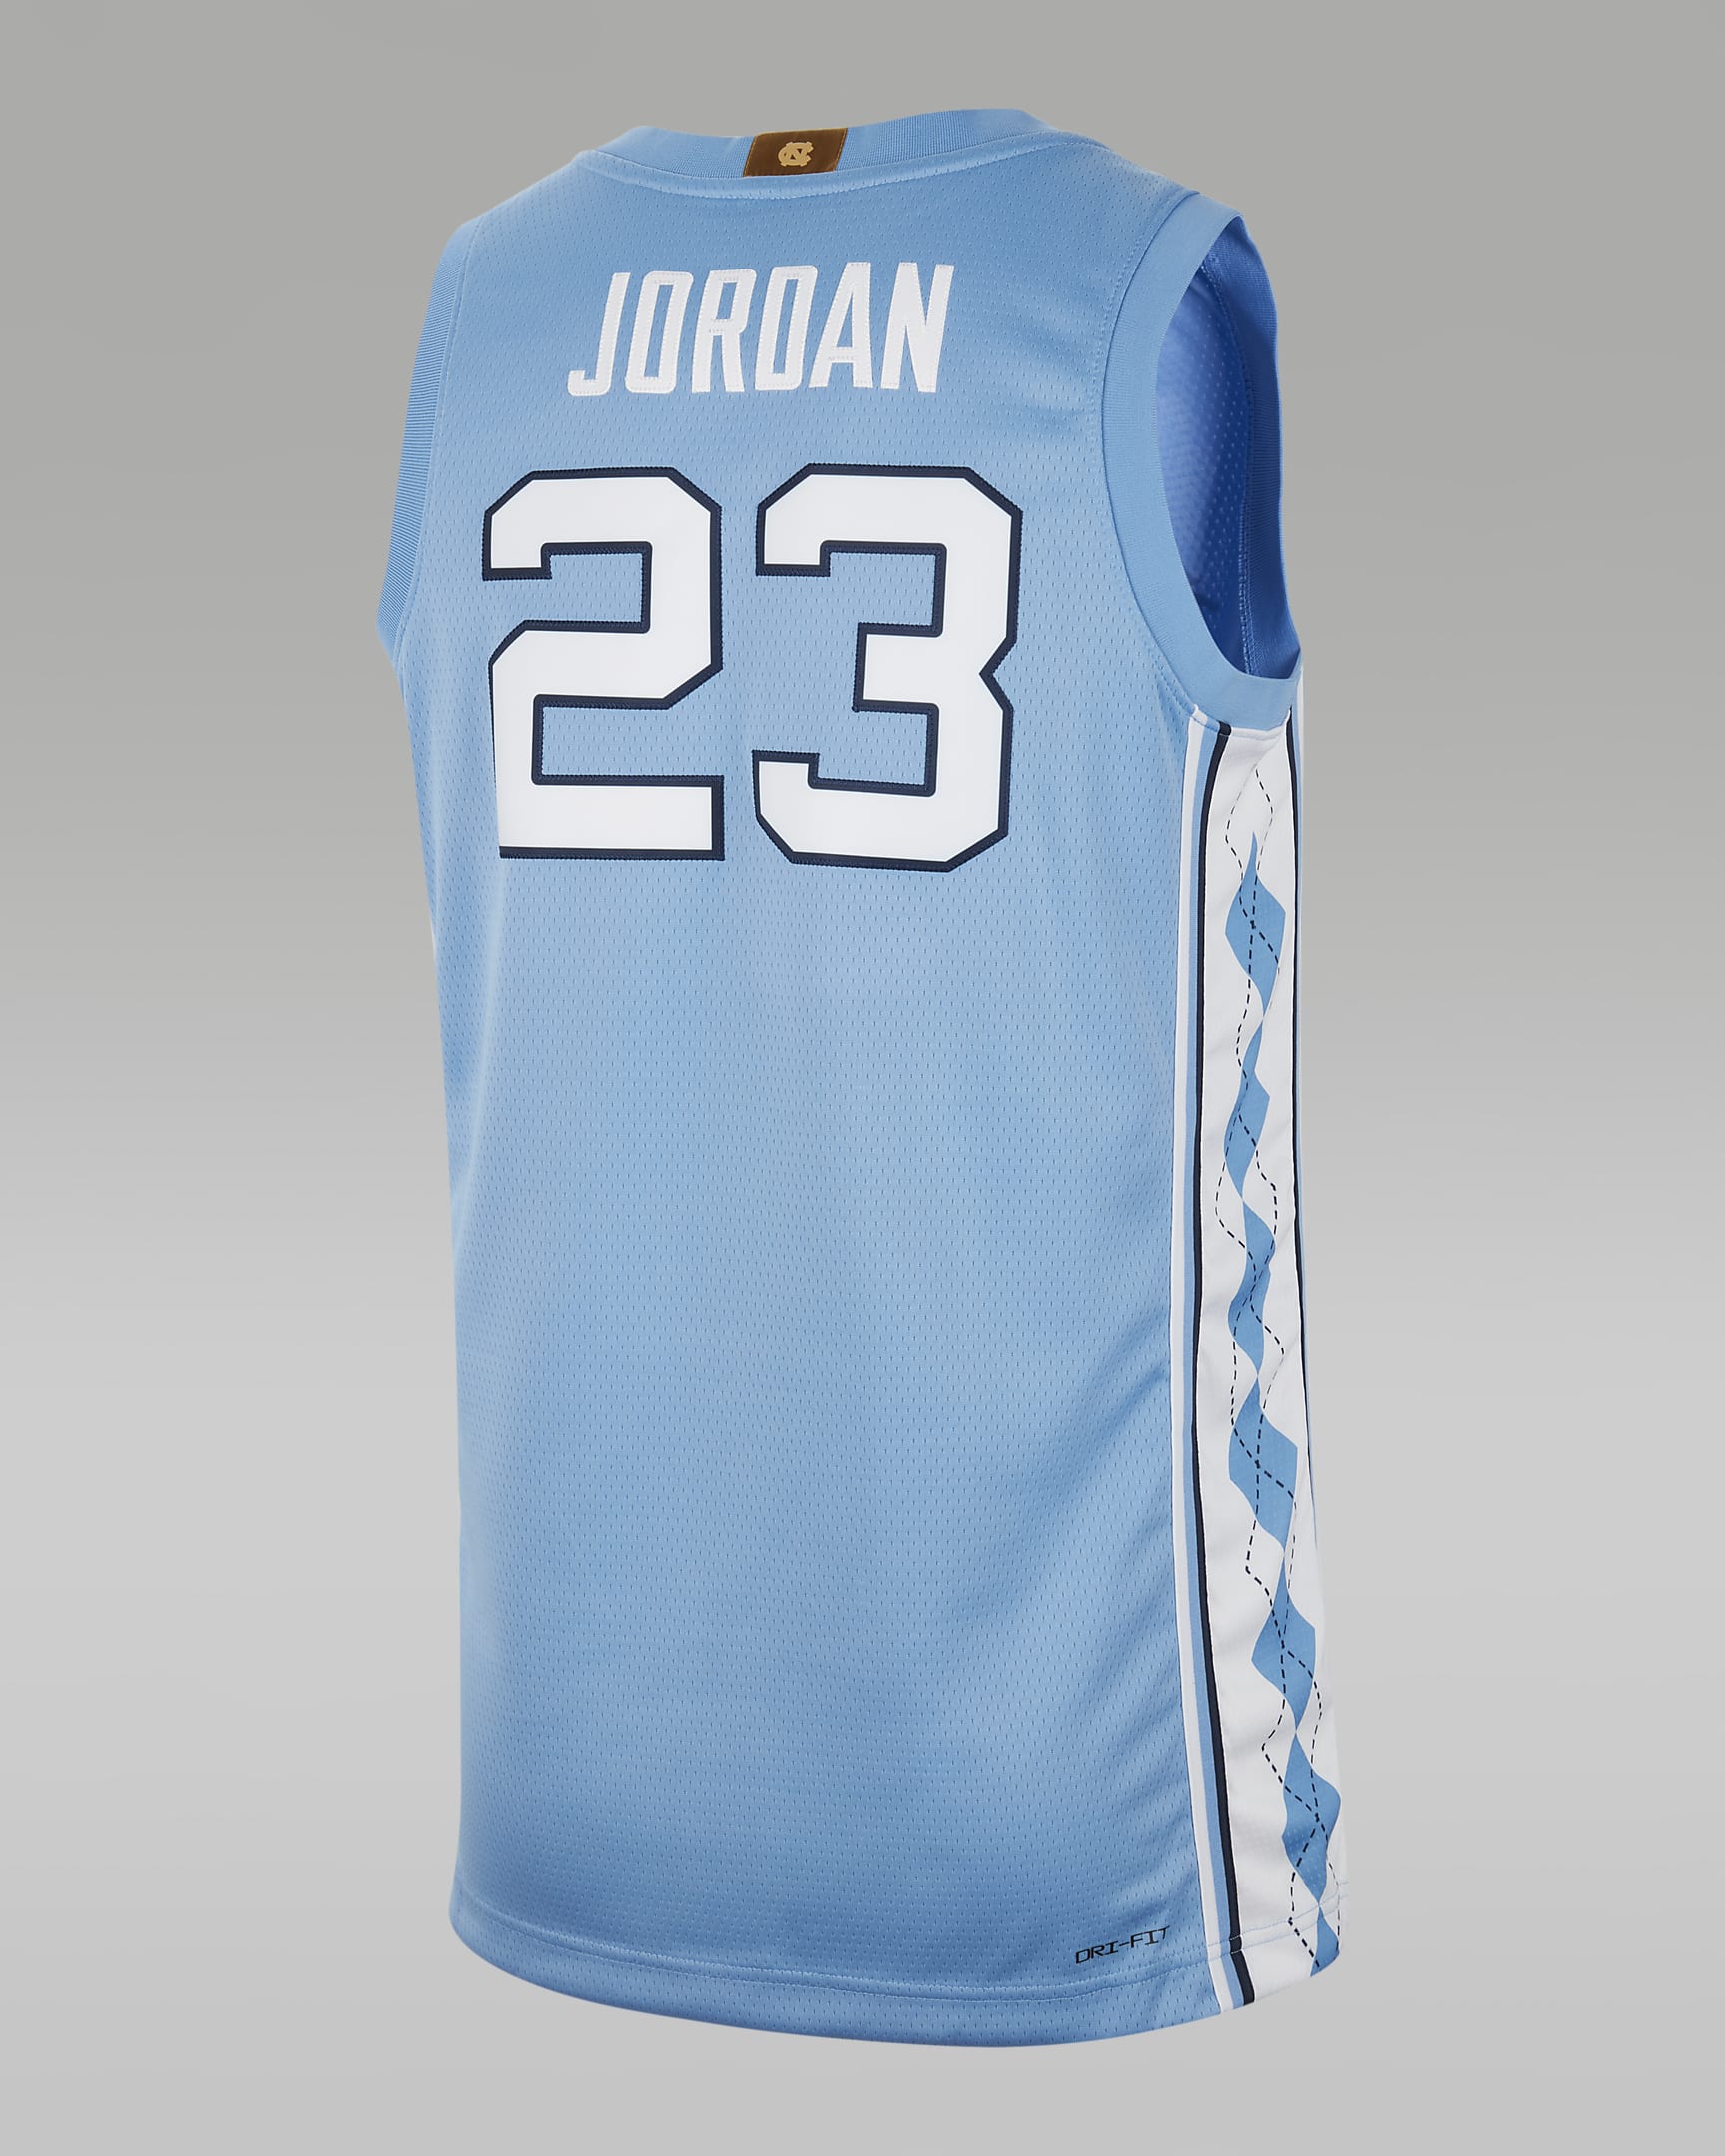 Jordan Limited Basketball Jersey RrSNC1 